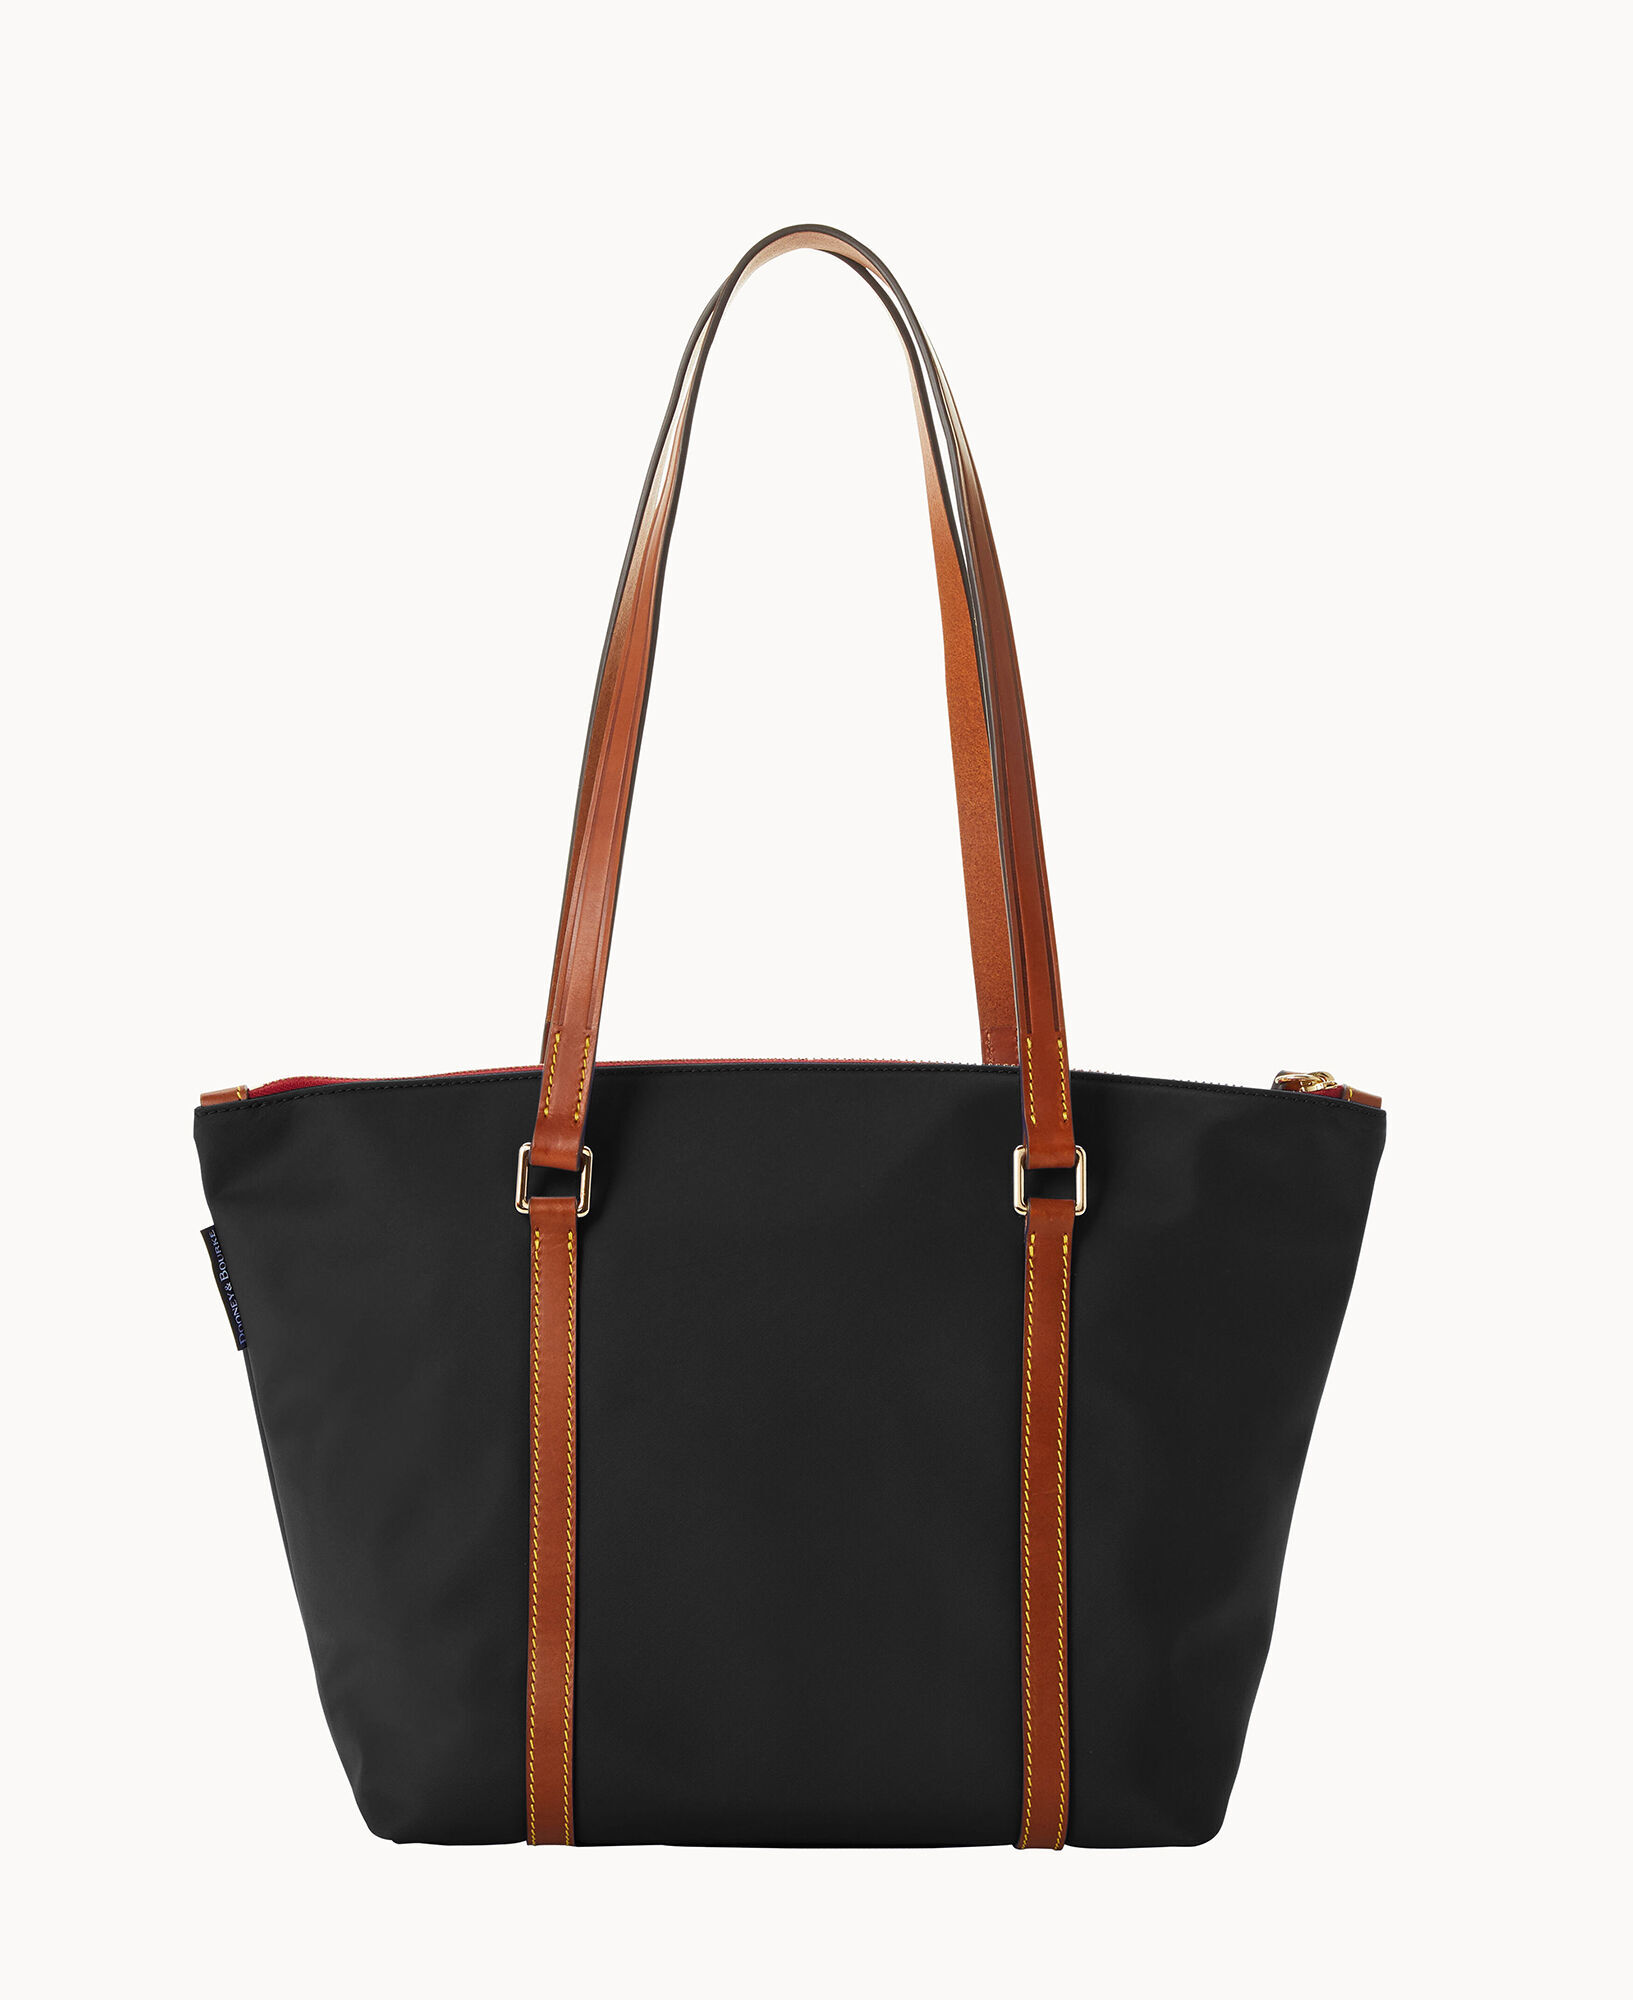 YALUXE Leather-Crossbody-Bags-for-Women Fashion Shoulder Handbag with Coin  Purse: Handbags